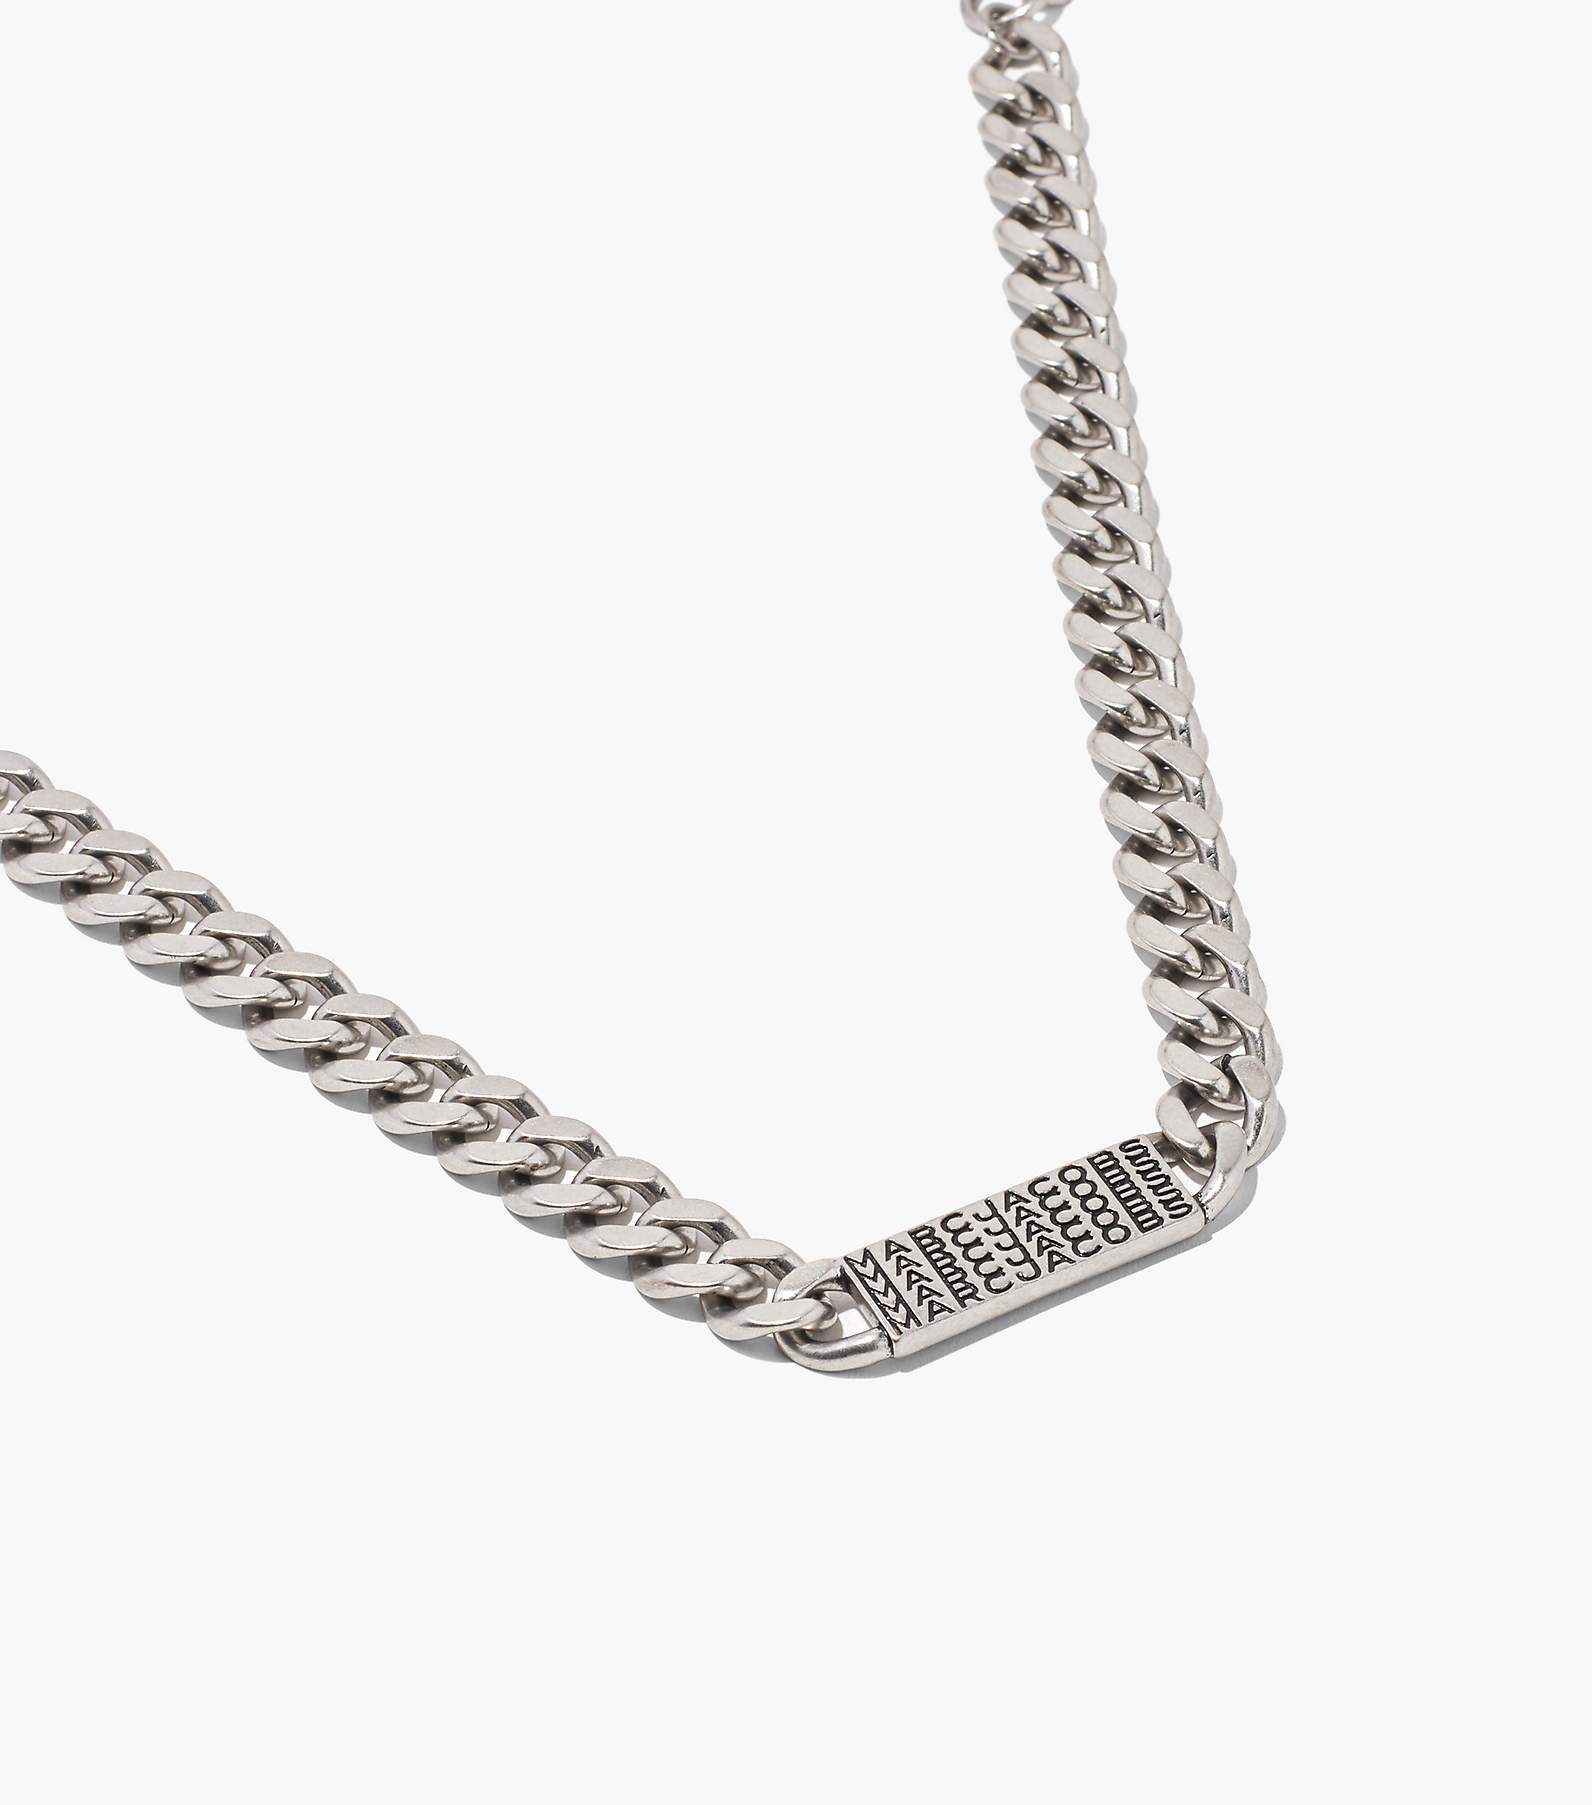 Marc Jacobs Monogram Chain Link Earrings